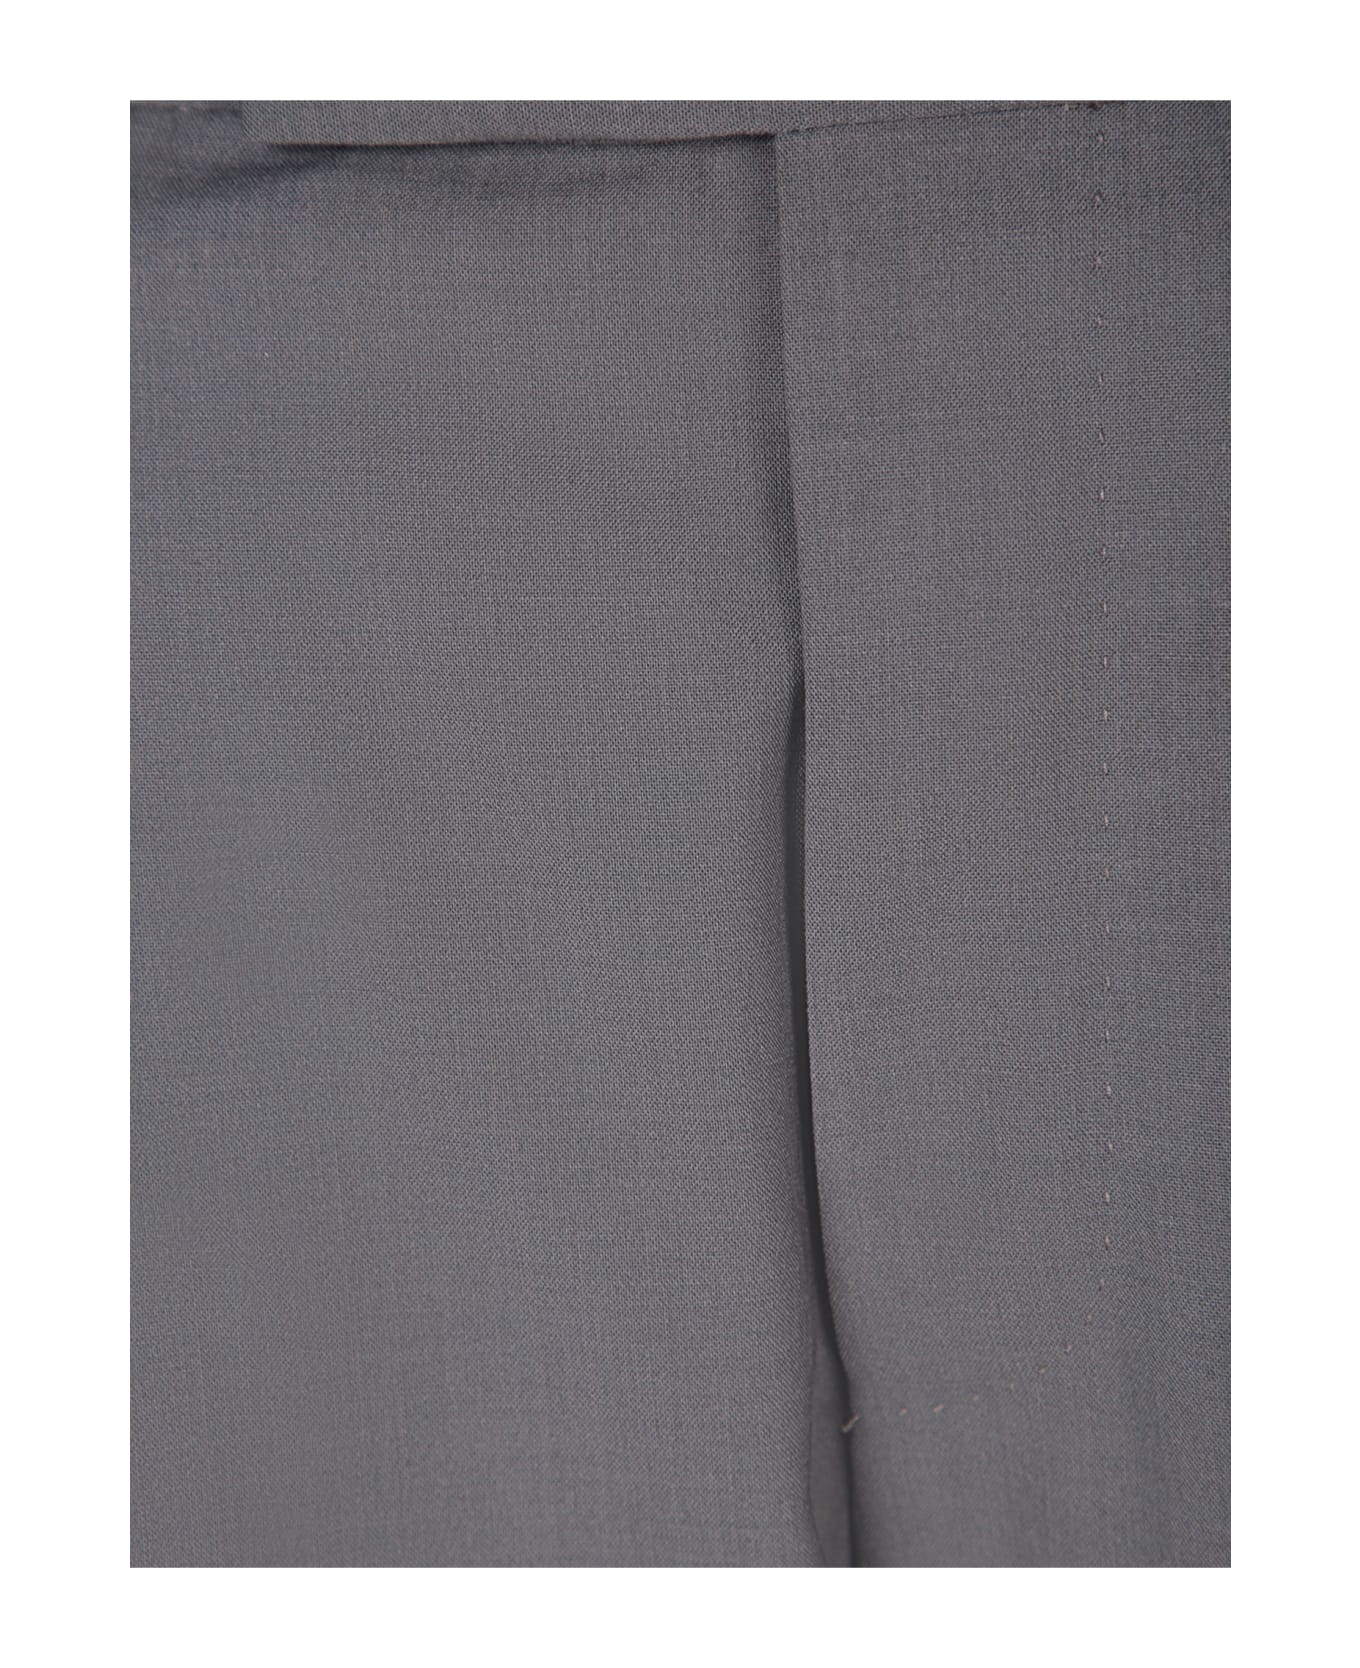 PT Torino Rebel Grey Trousers - Grey